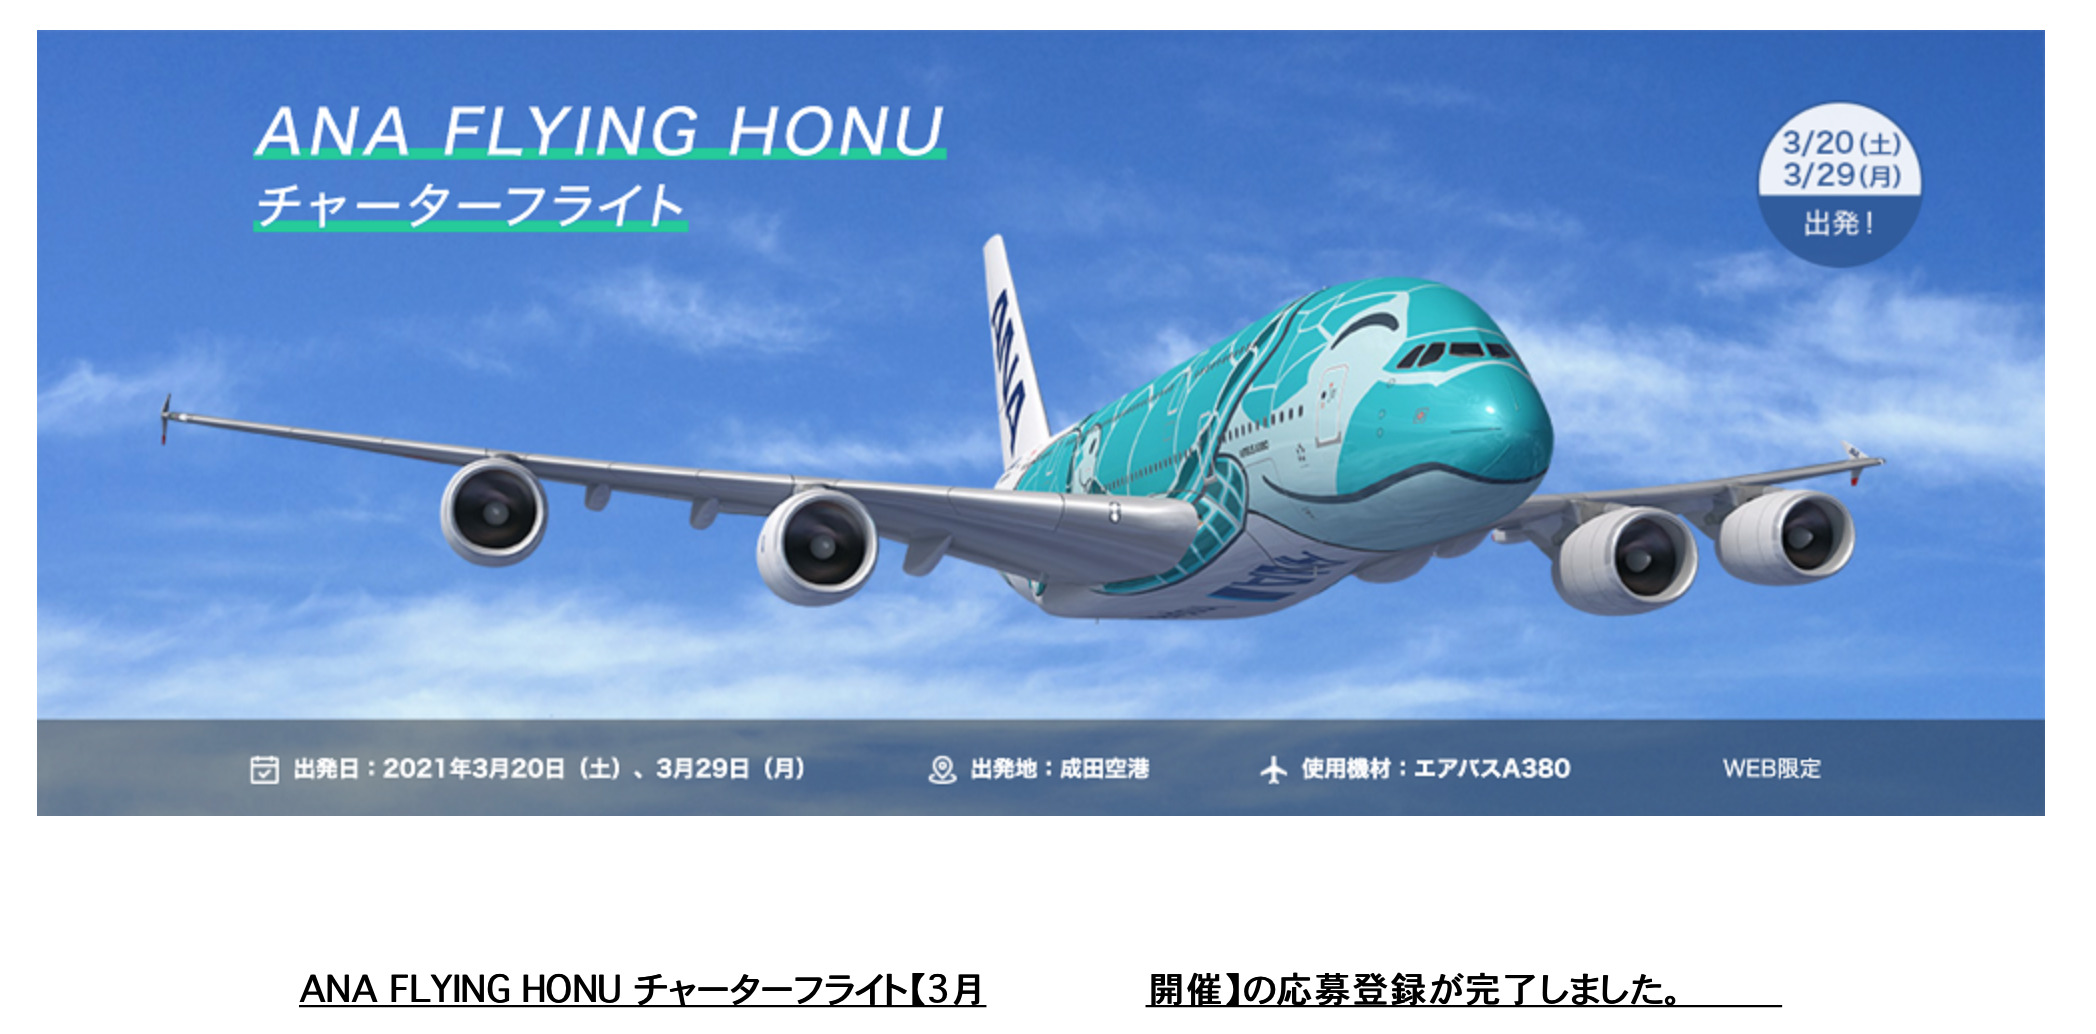 ANA FLYING HONU」チャーターフライト 2021年3月実施が決定